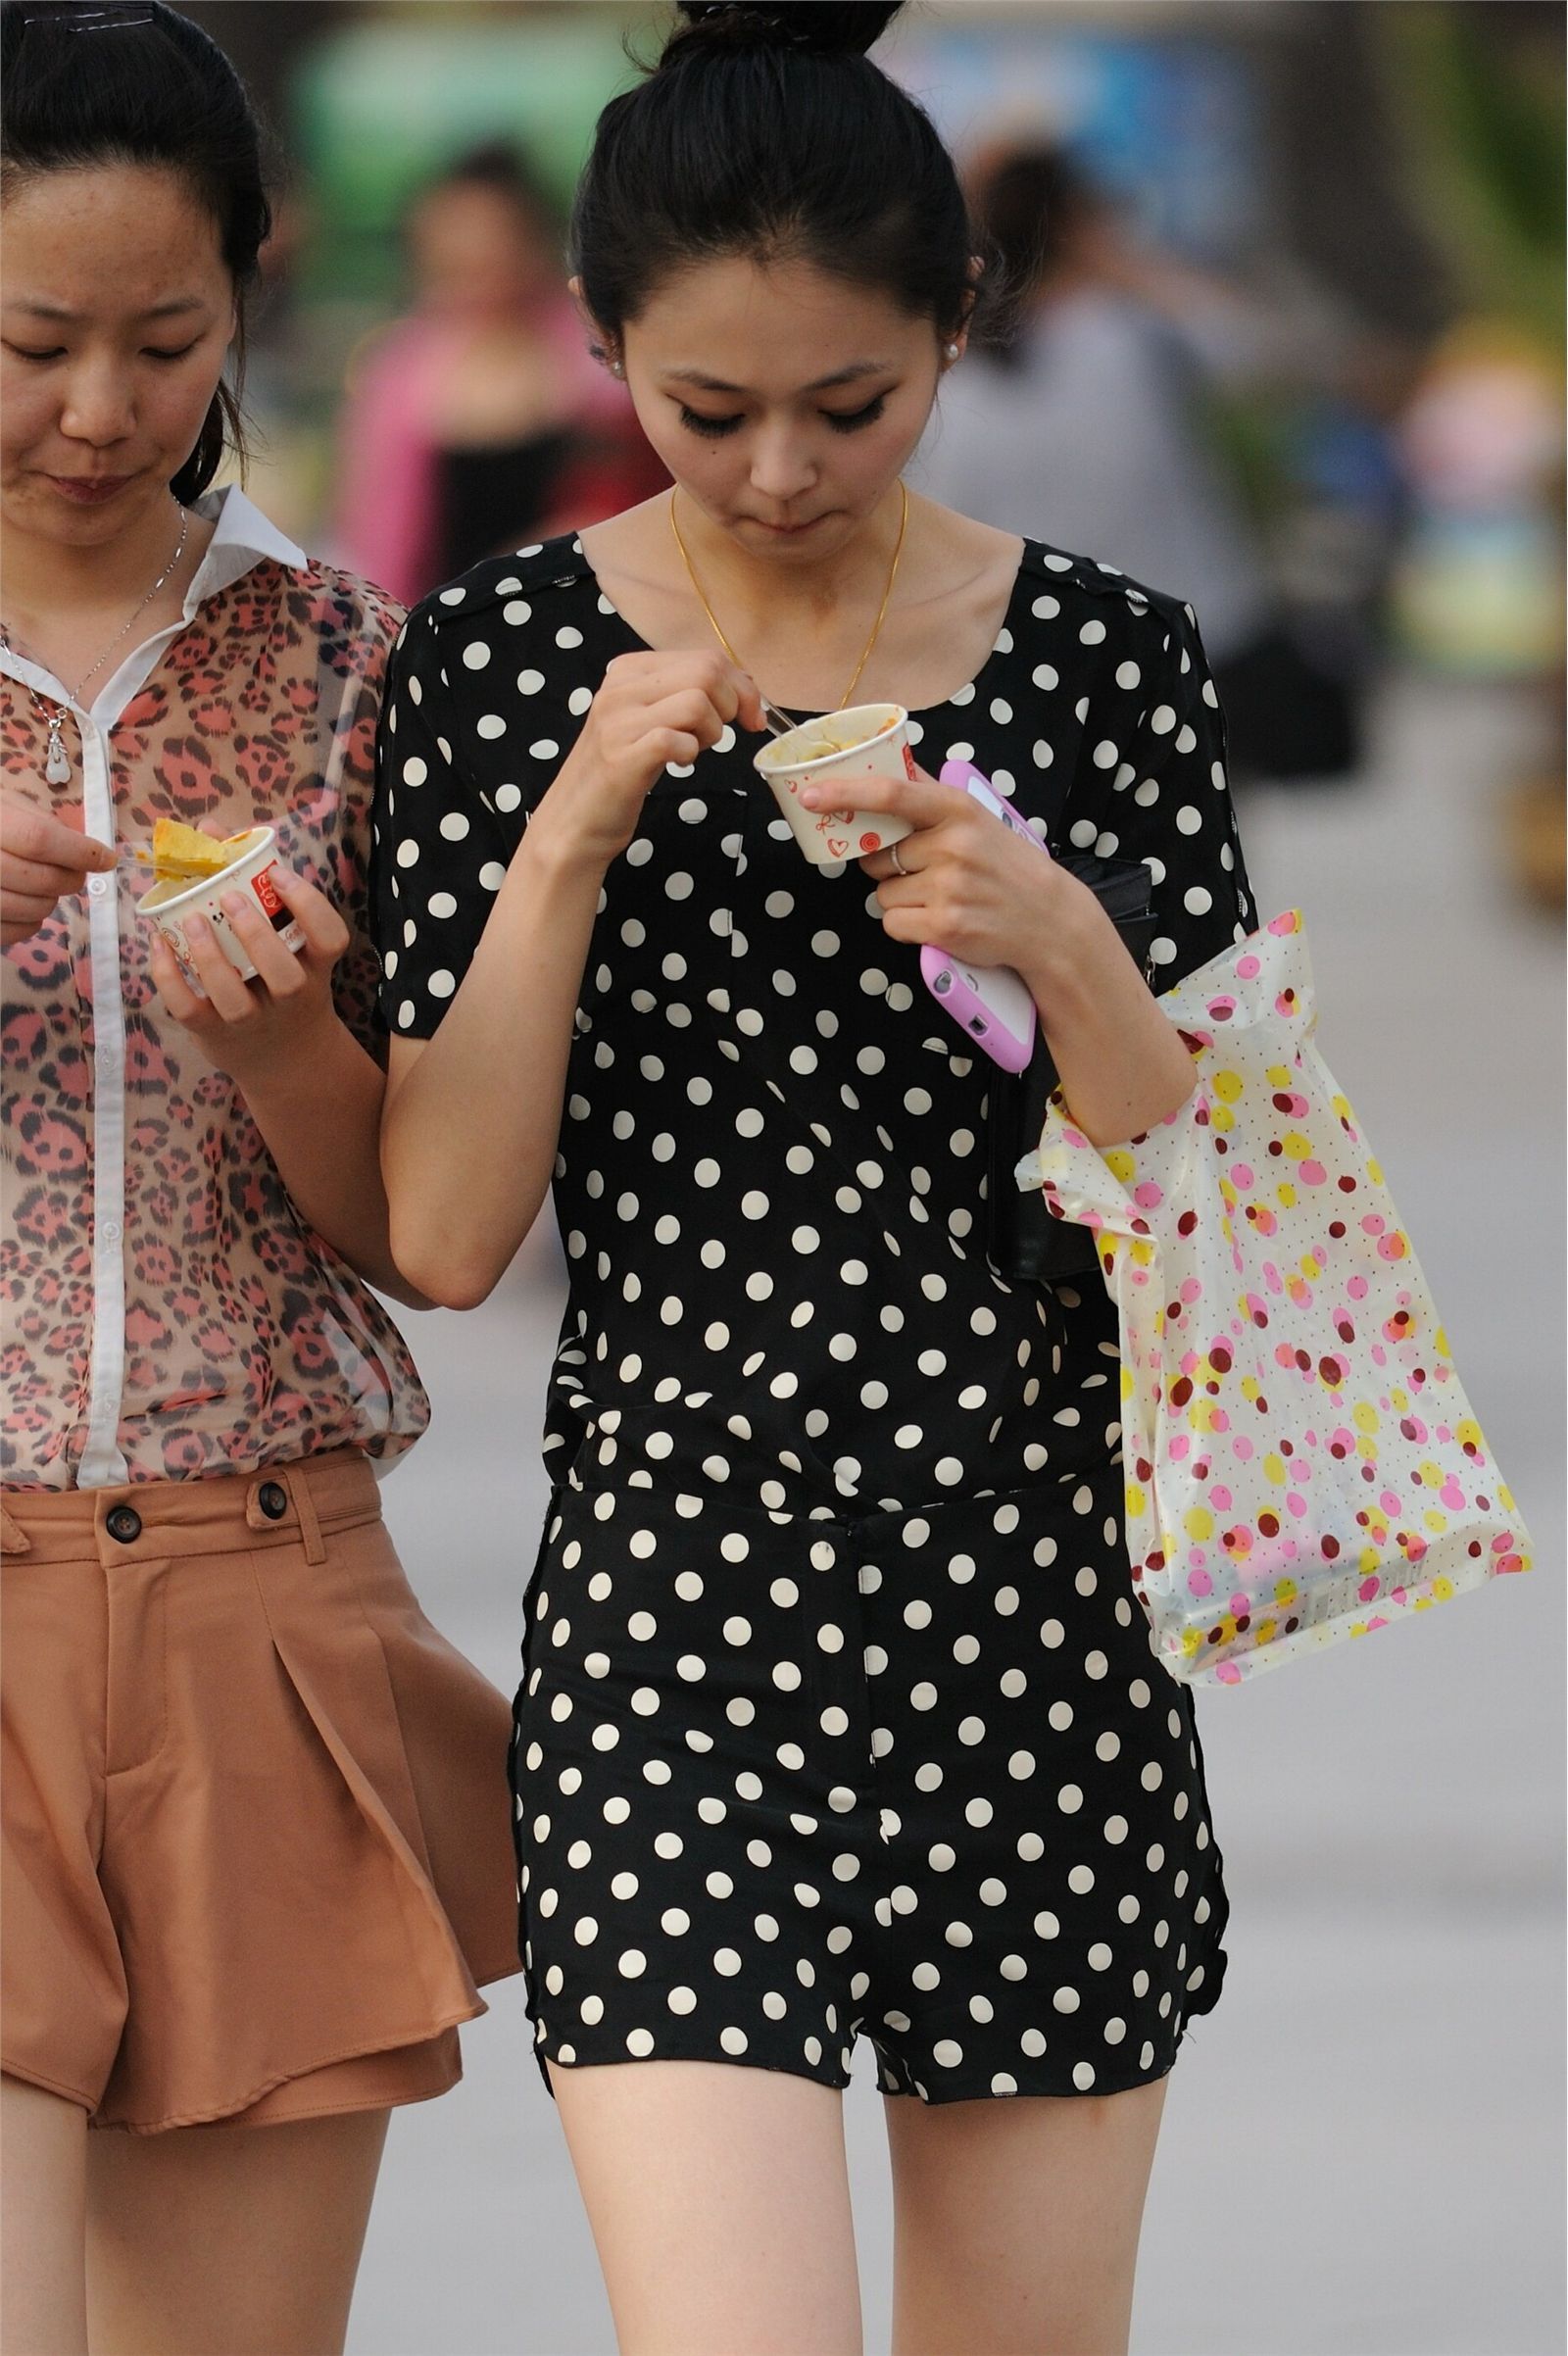 [outdoor Street Photo] 2013.10.01 two girls eating ice cream